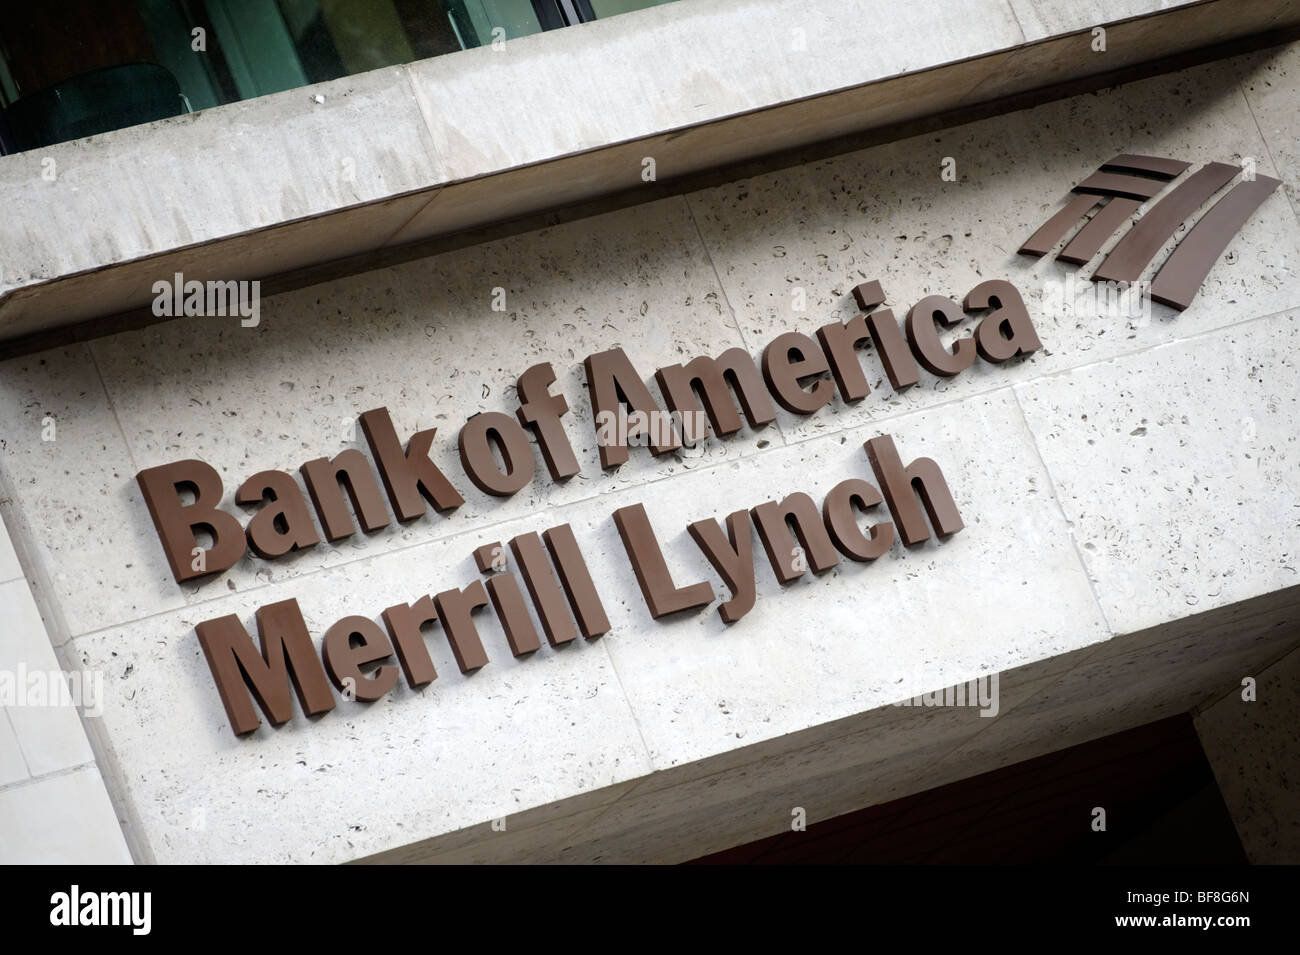 Neue Bank of America Merrill Lynch unterzeichnen am King Edward Street. City of London. UK 2009. Stockfoto